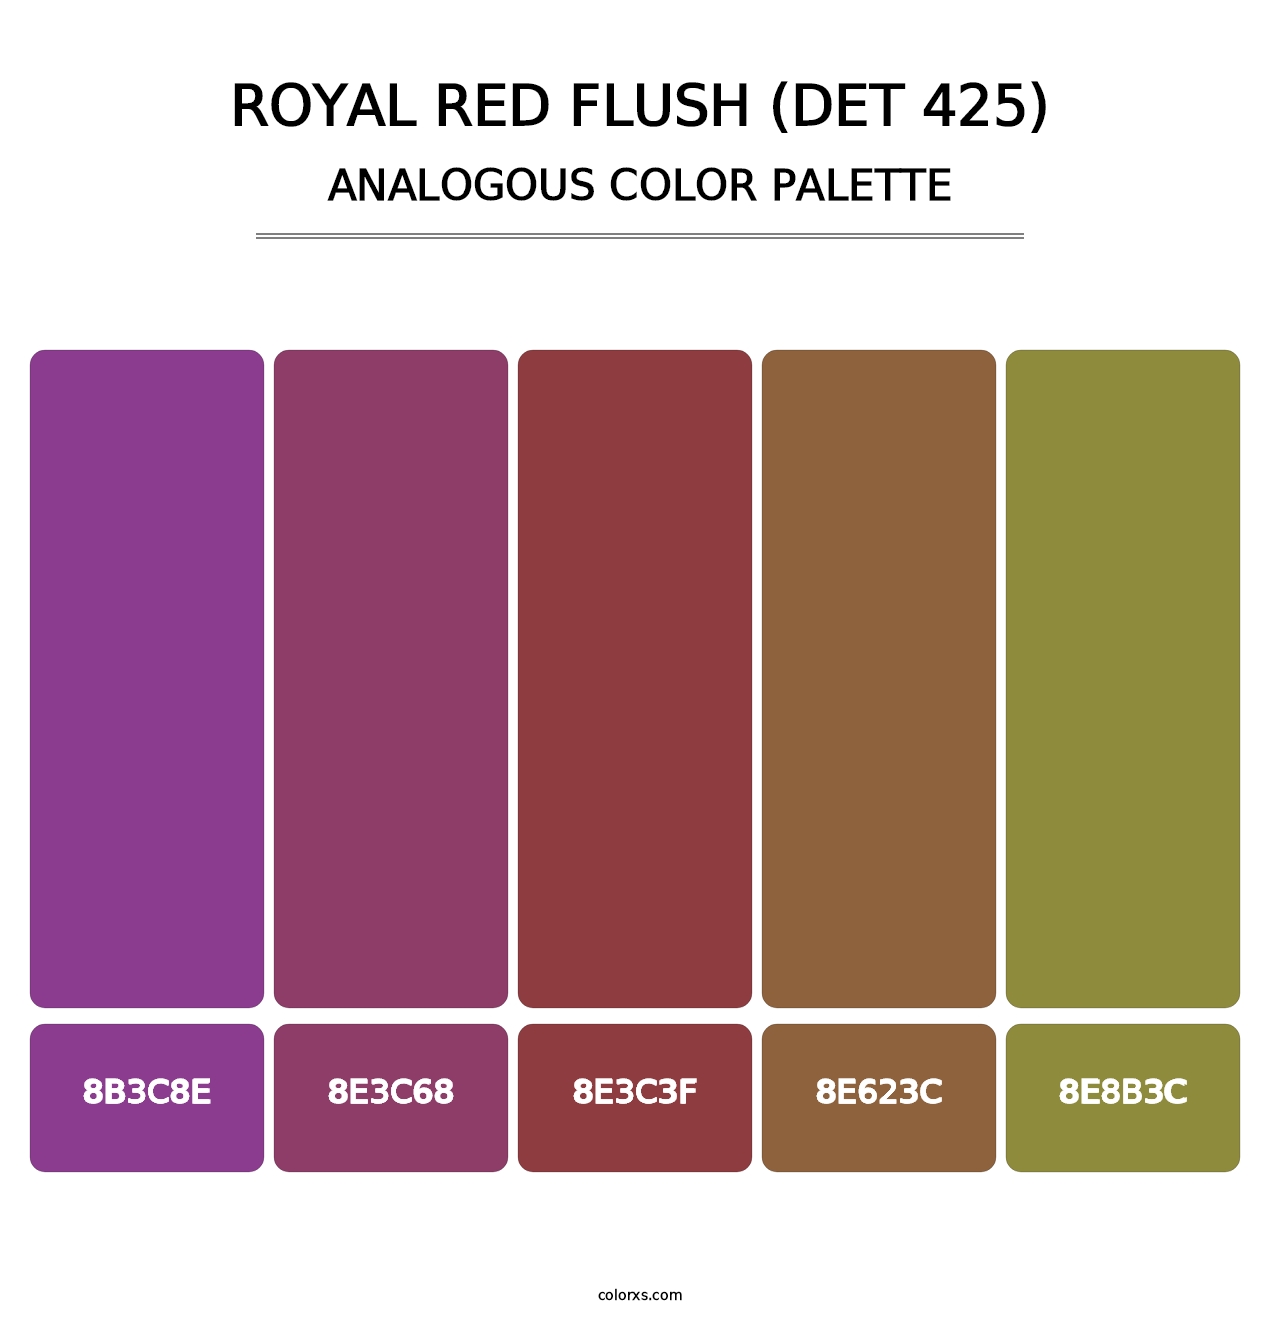 Royal Red Flush (DET 425) - Analogous Color Palette